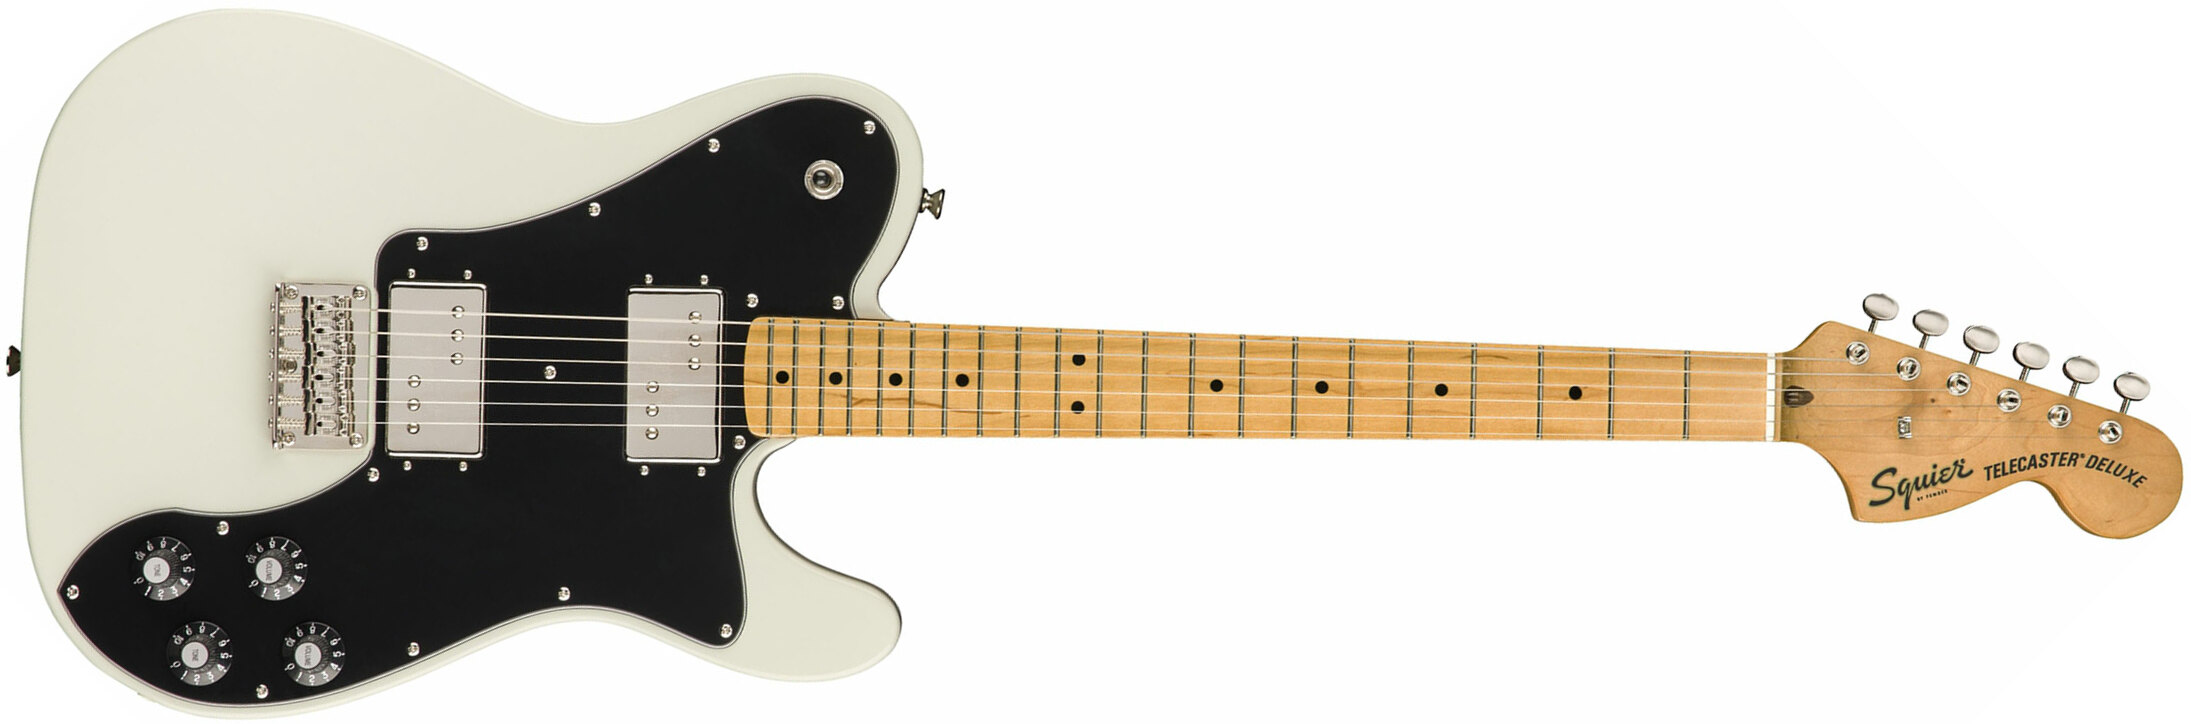 Squier Tele Deluxe Classic Vibe 70s 2019 Hh Mn - Olympic White - Guitarra eléctrica con forma de tel - Main picture